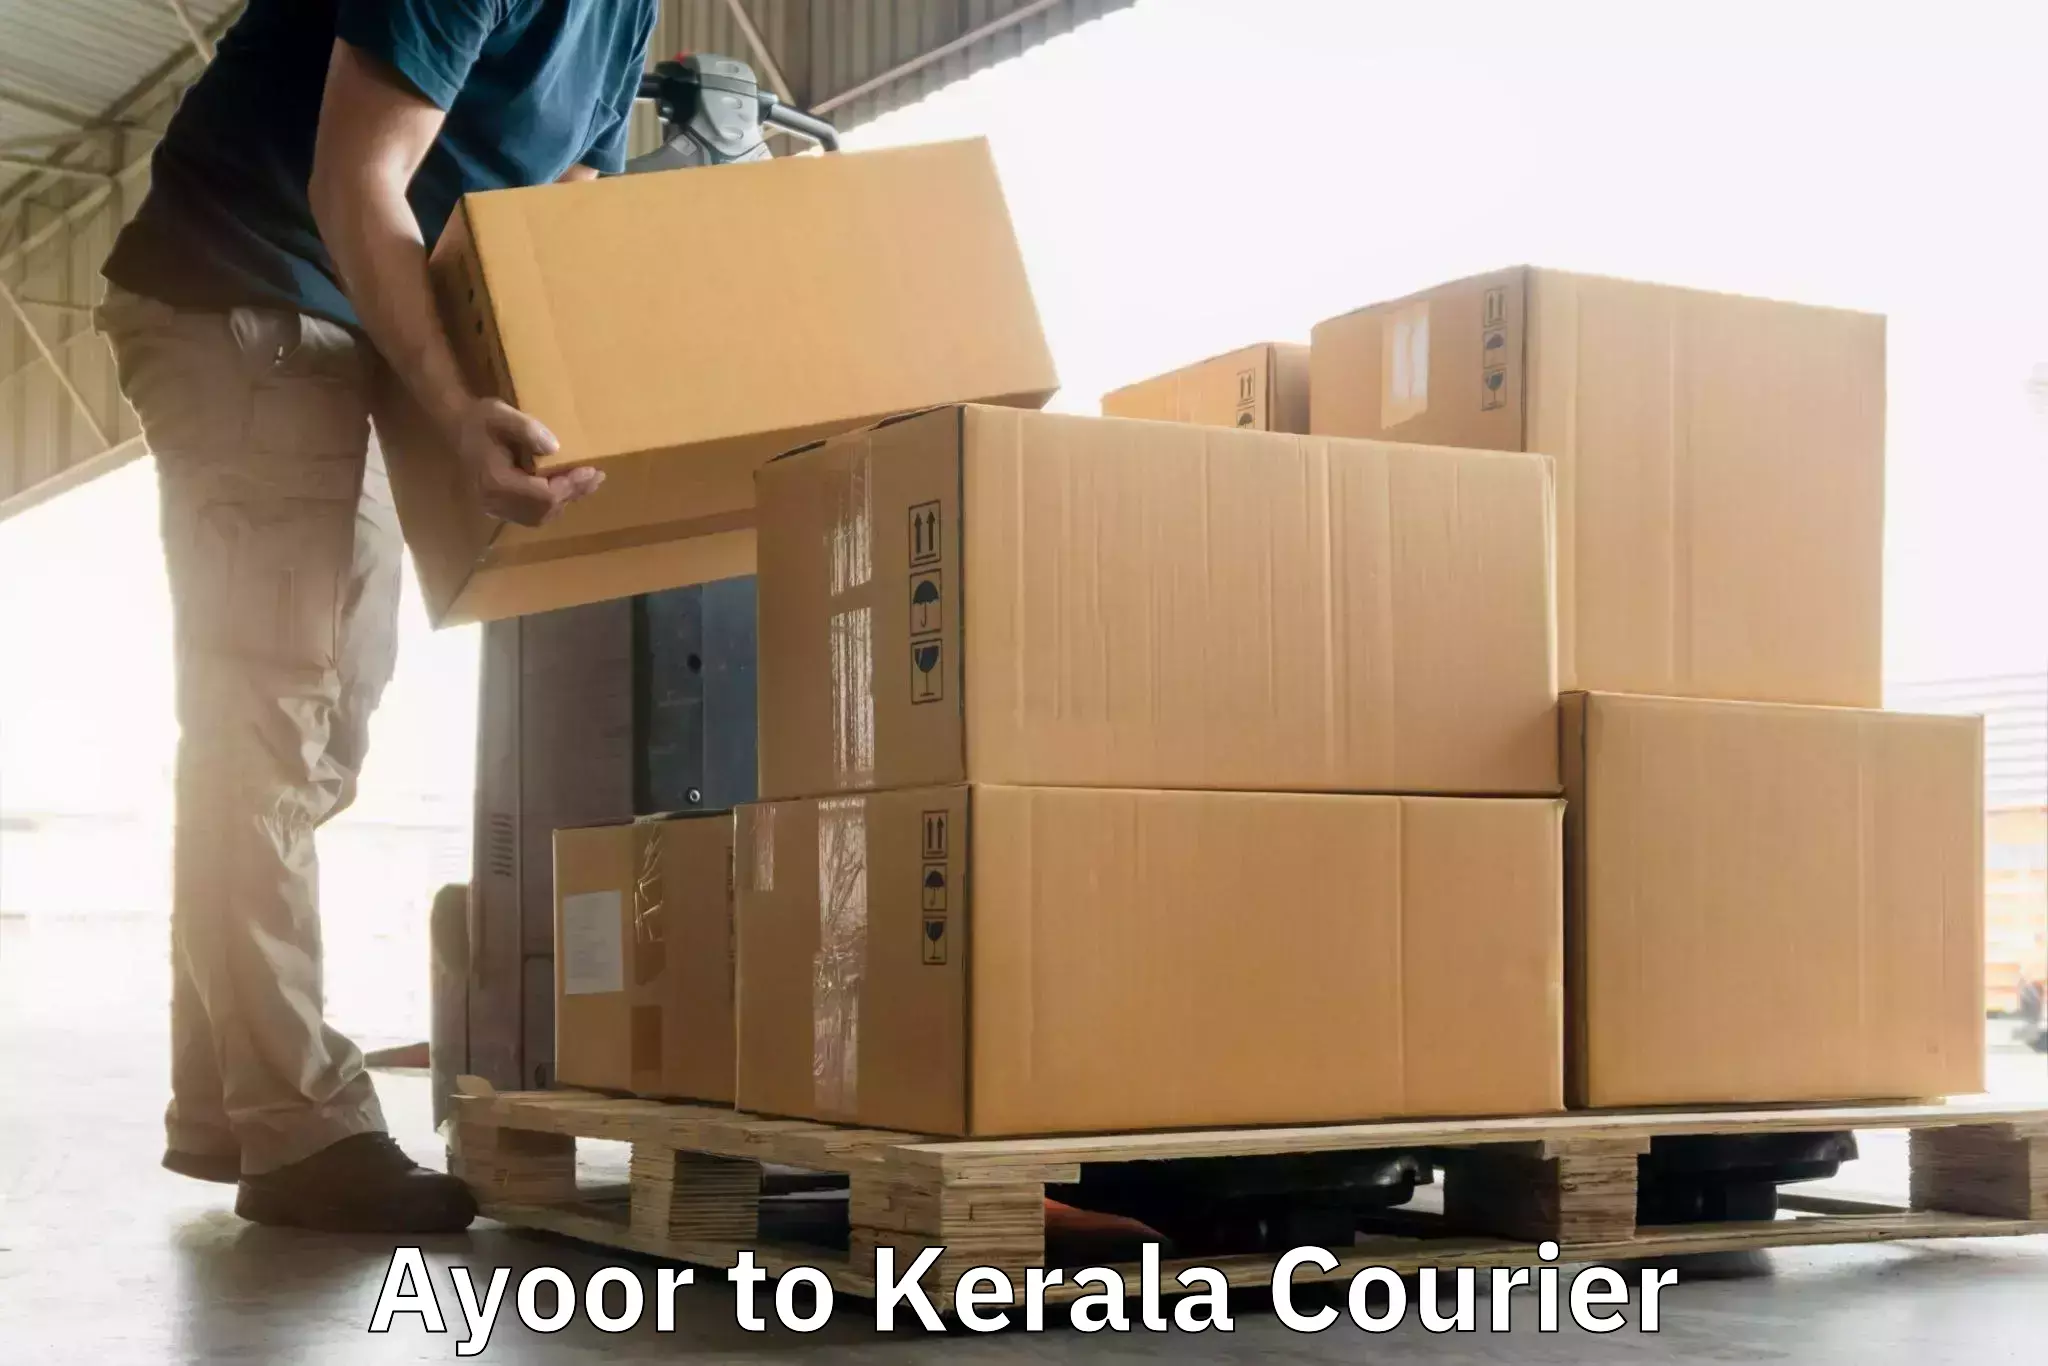 Premium courier solutions Ayoor to Cochin Port Kochi